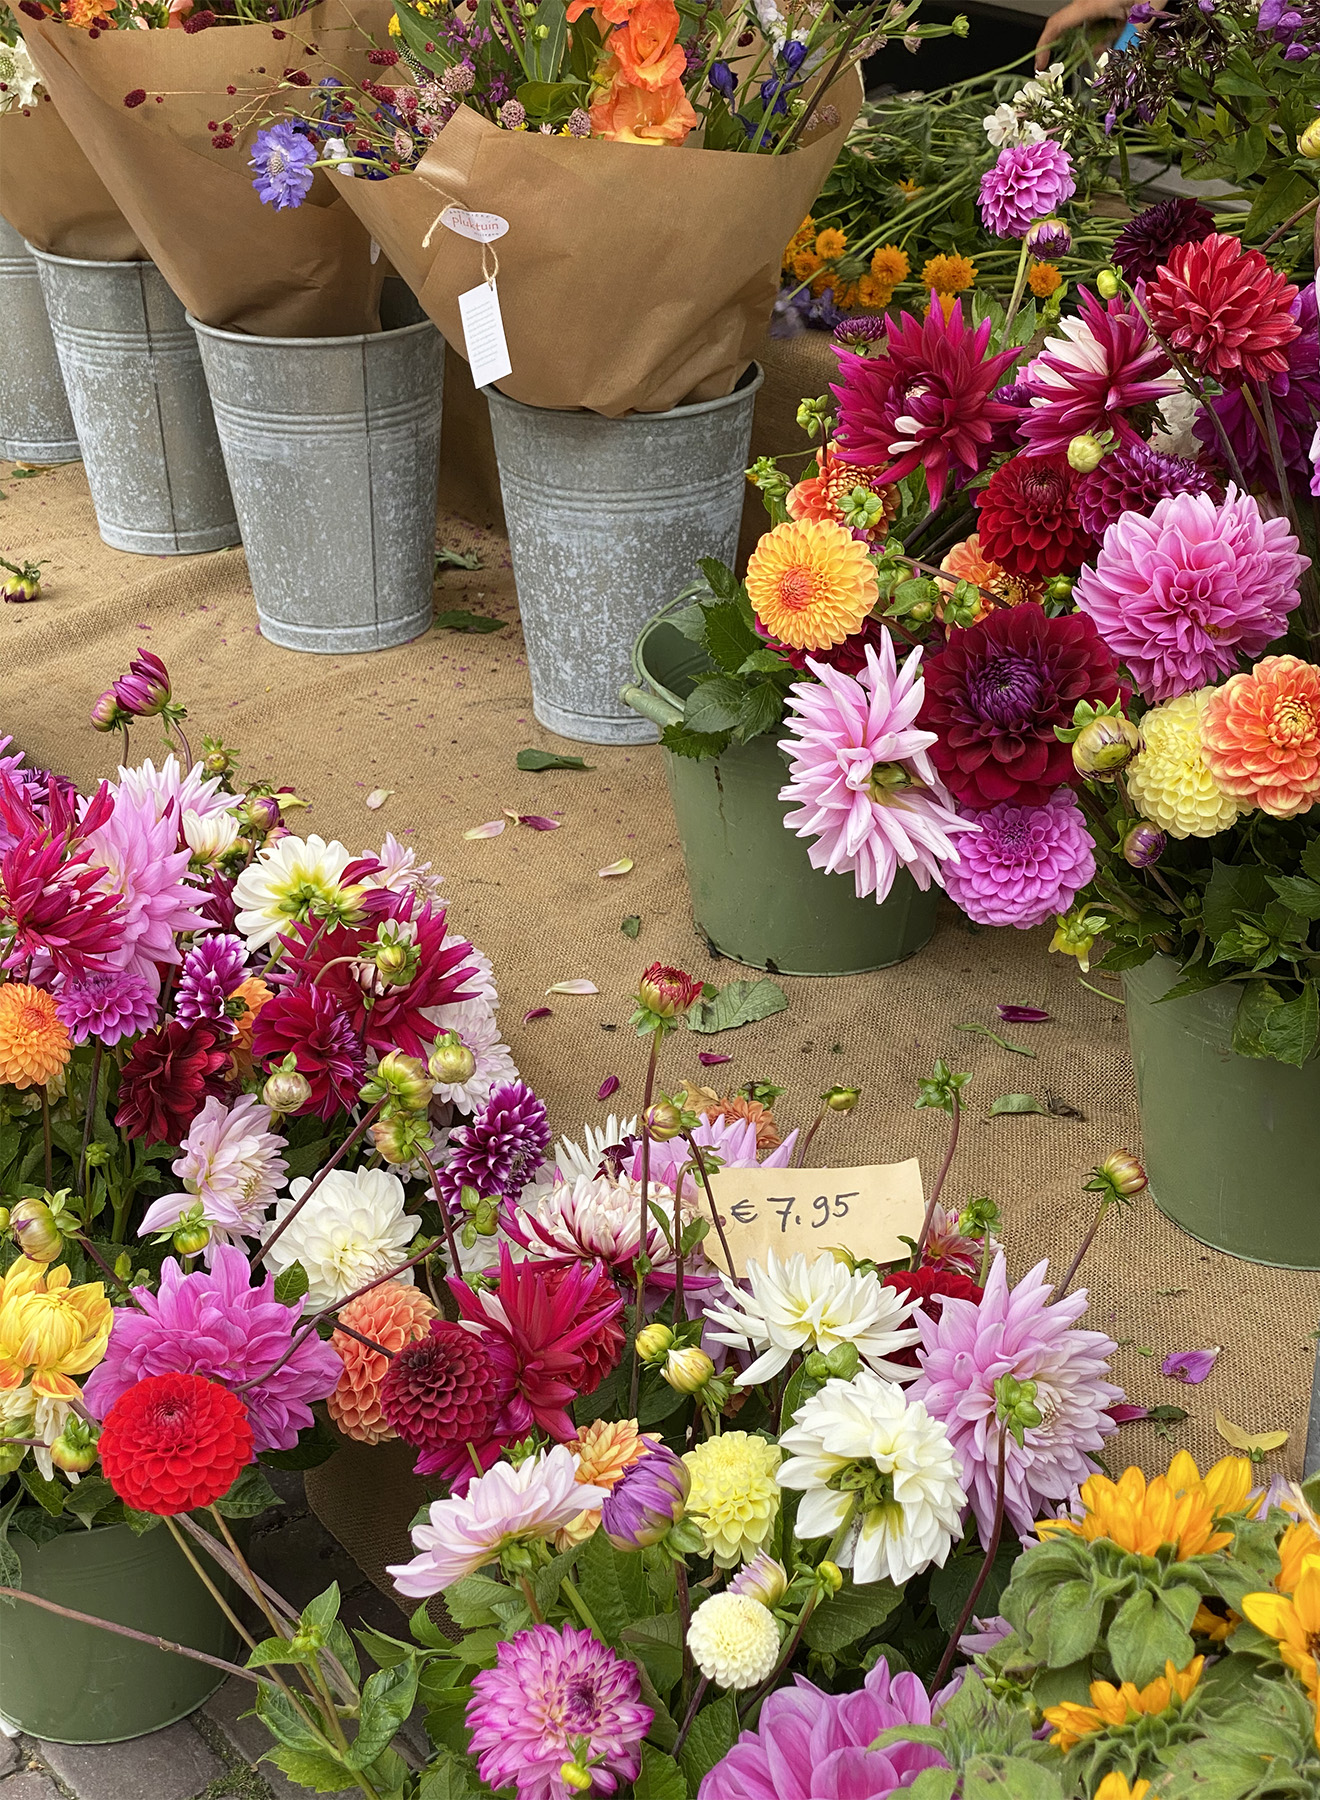 Bouquet of flowers at the Noordermarkt fair in Amsterdam